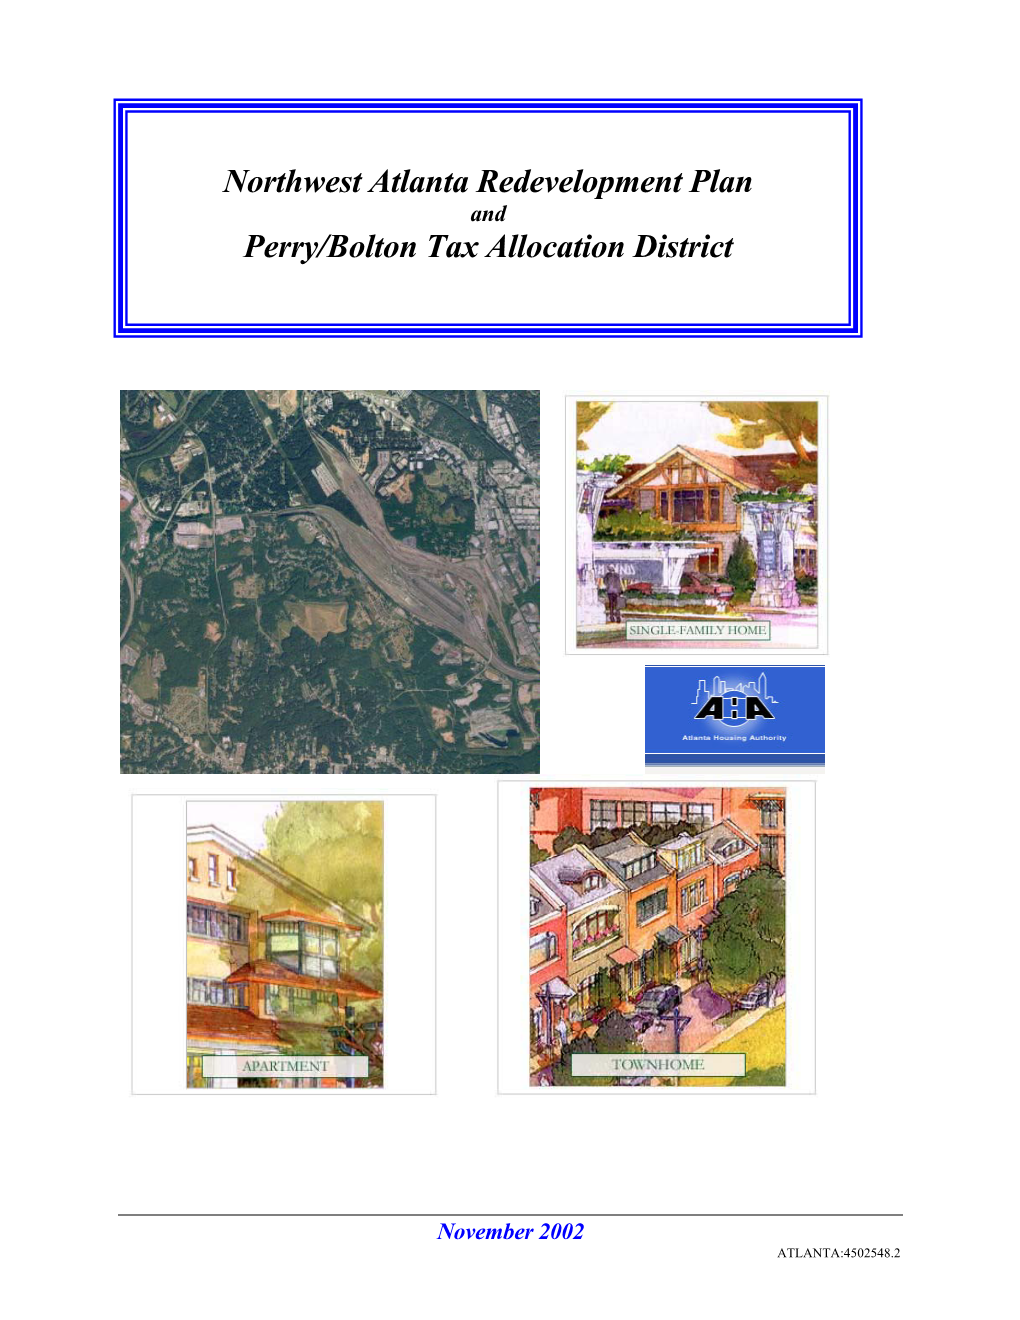 Northwest Atlanta Redevelopment Plan Perry/Bolton Tax Allocation District